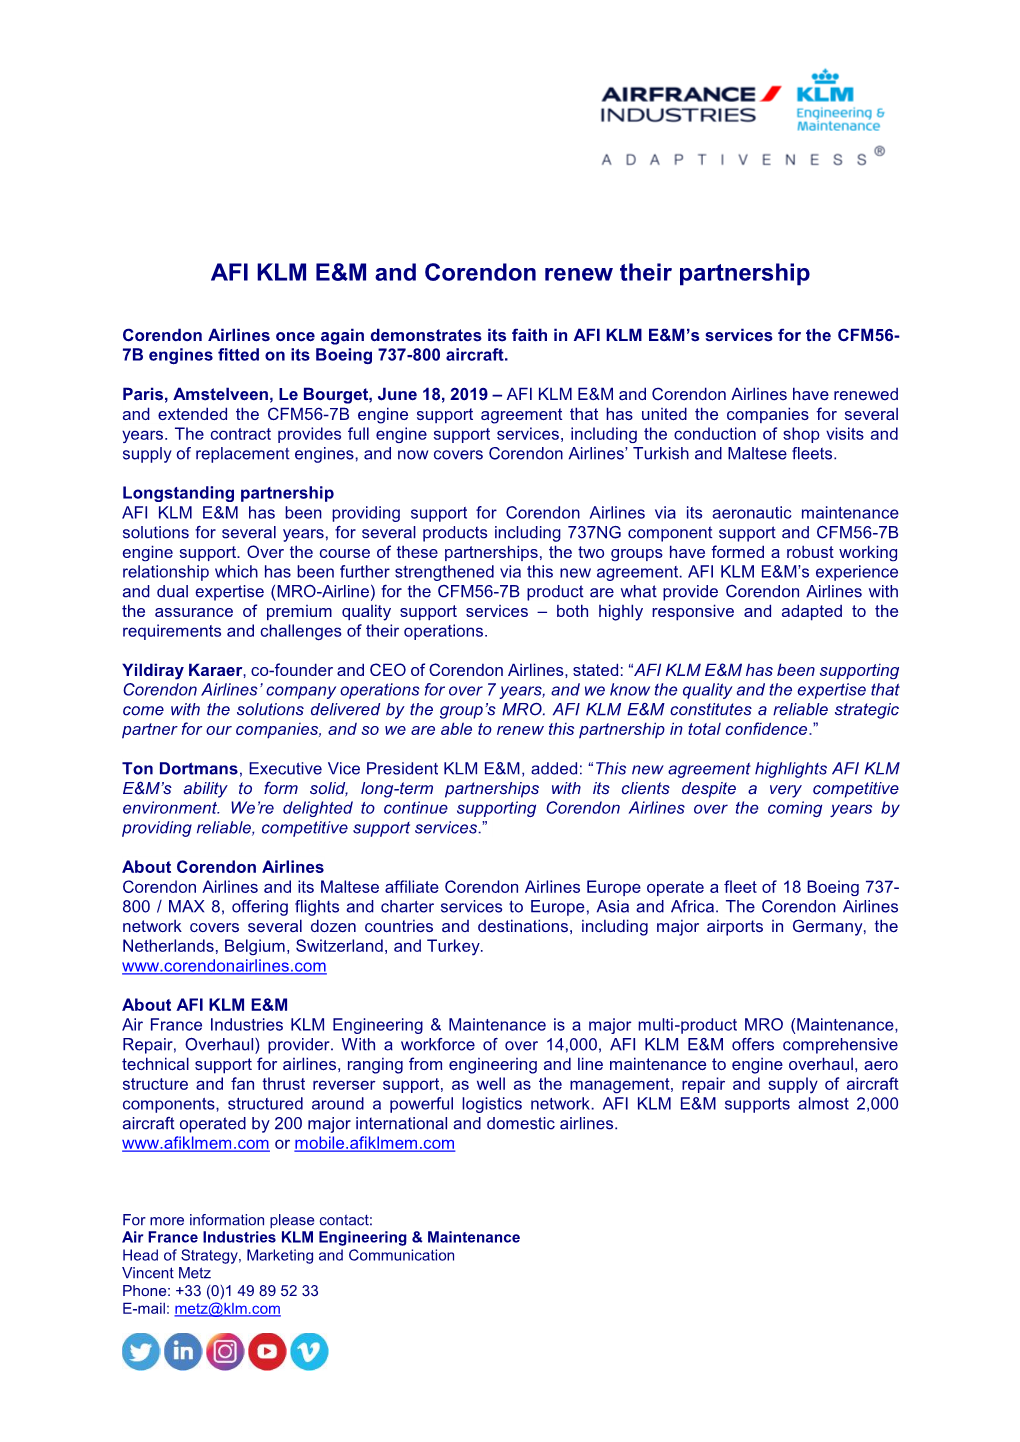 AFI KLM E&M and Corendon Renew Their Partnership